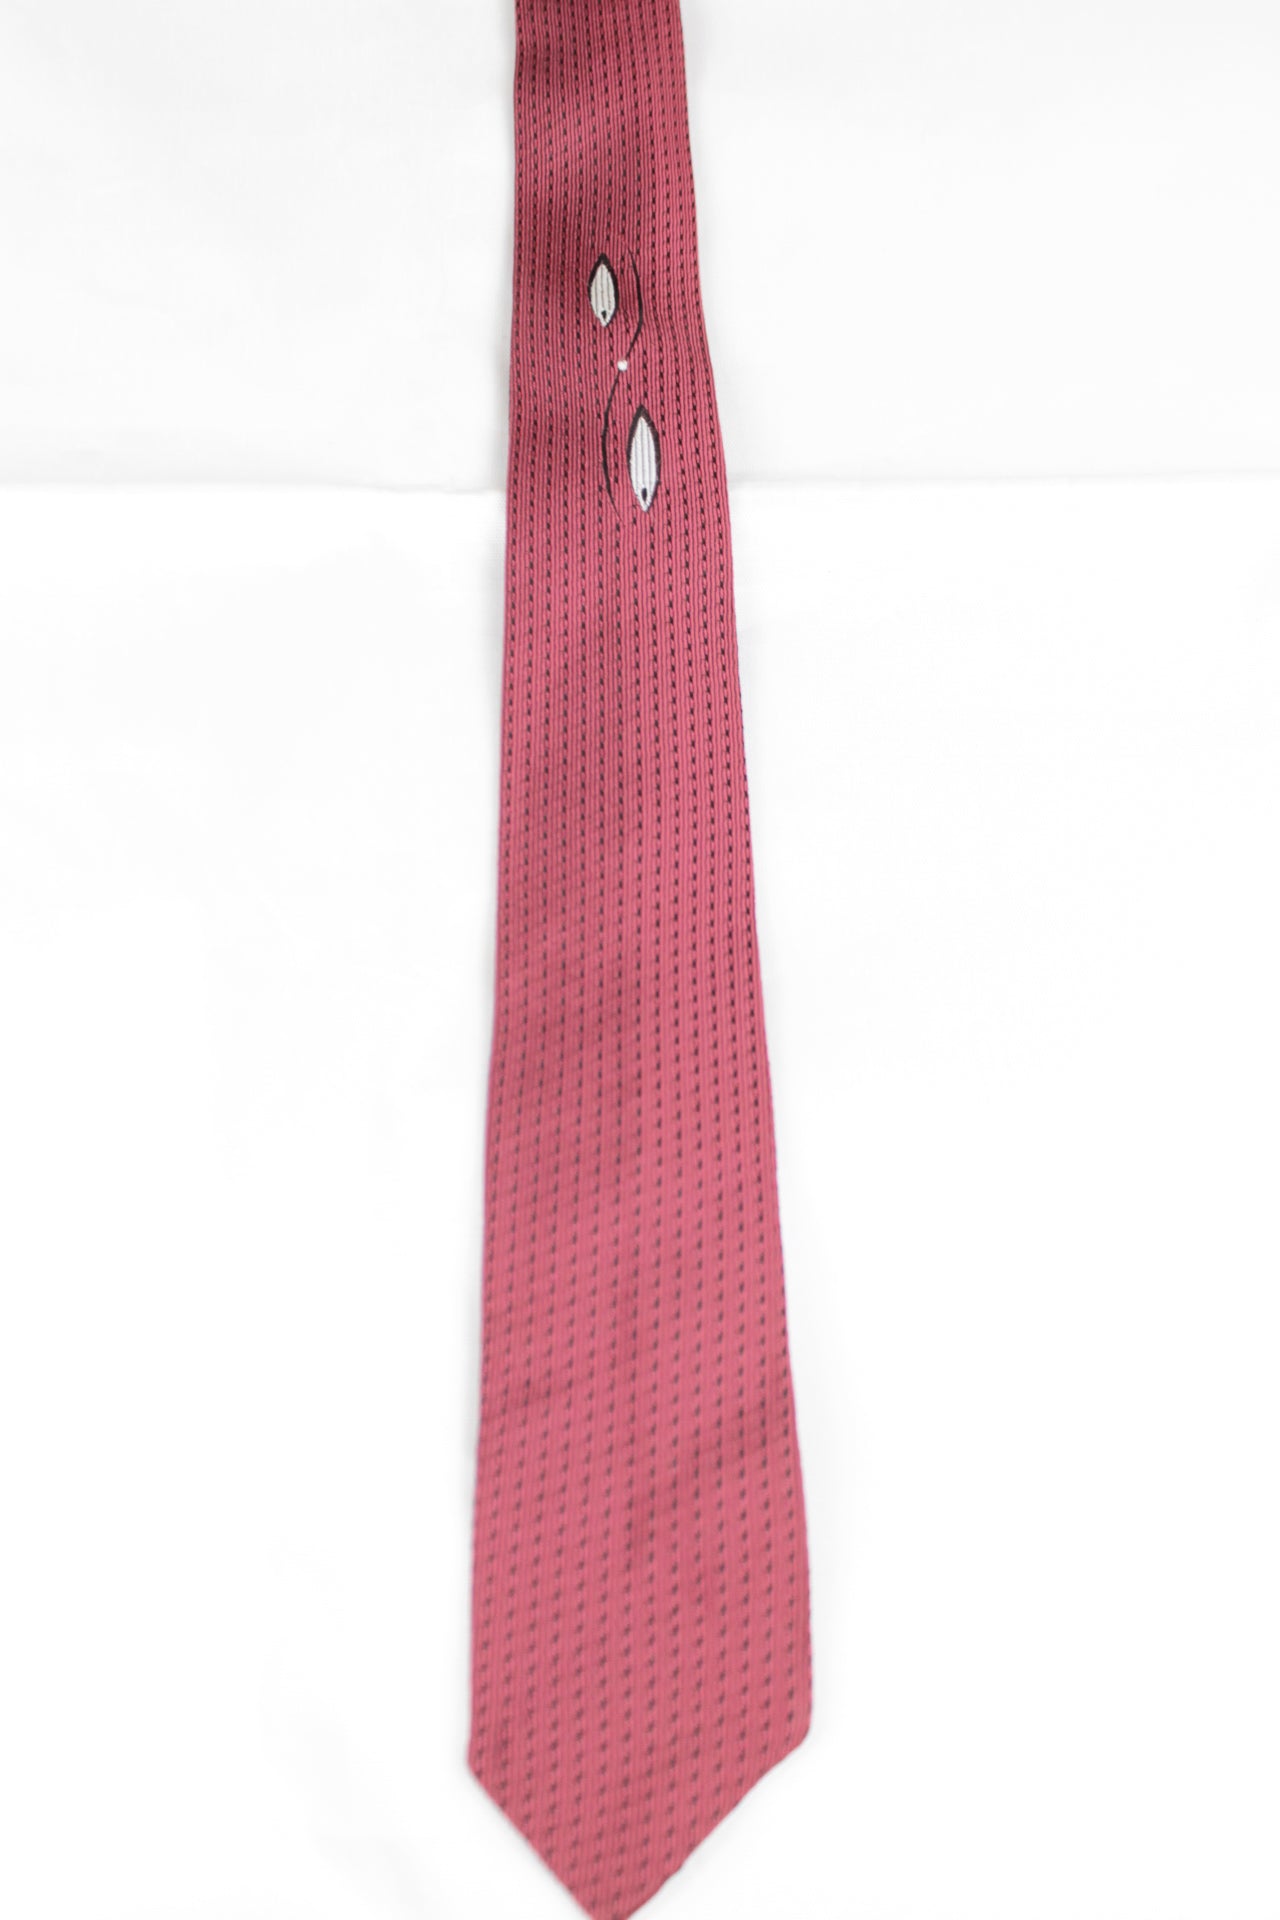 Vintage Currant Red 1950s Mod Skinny Tie